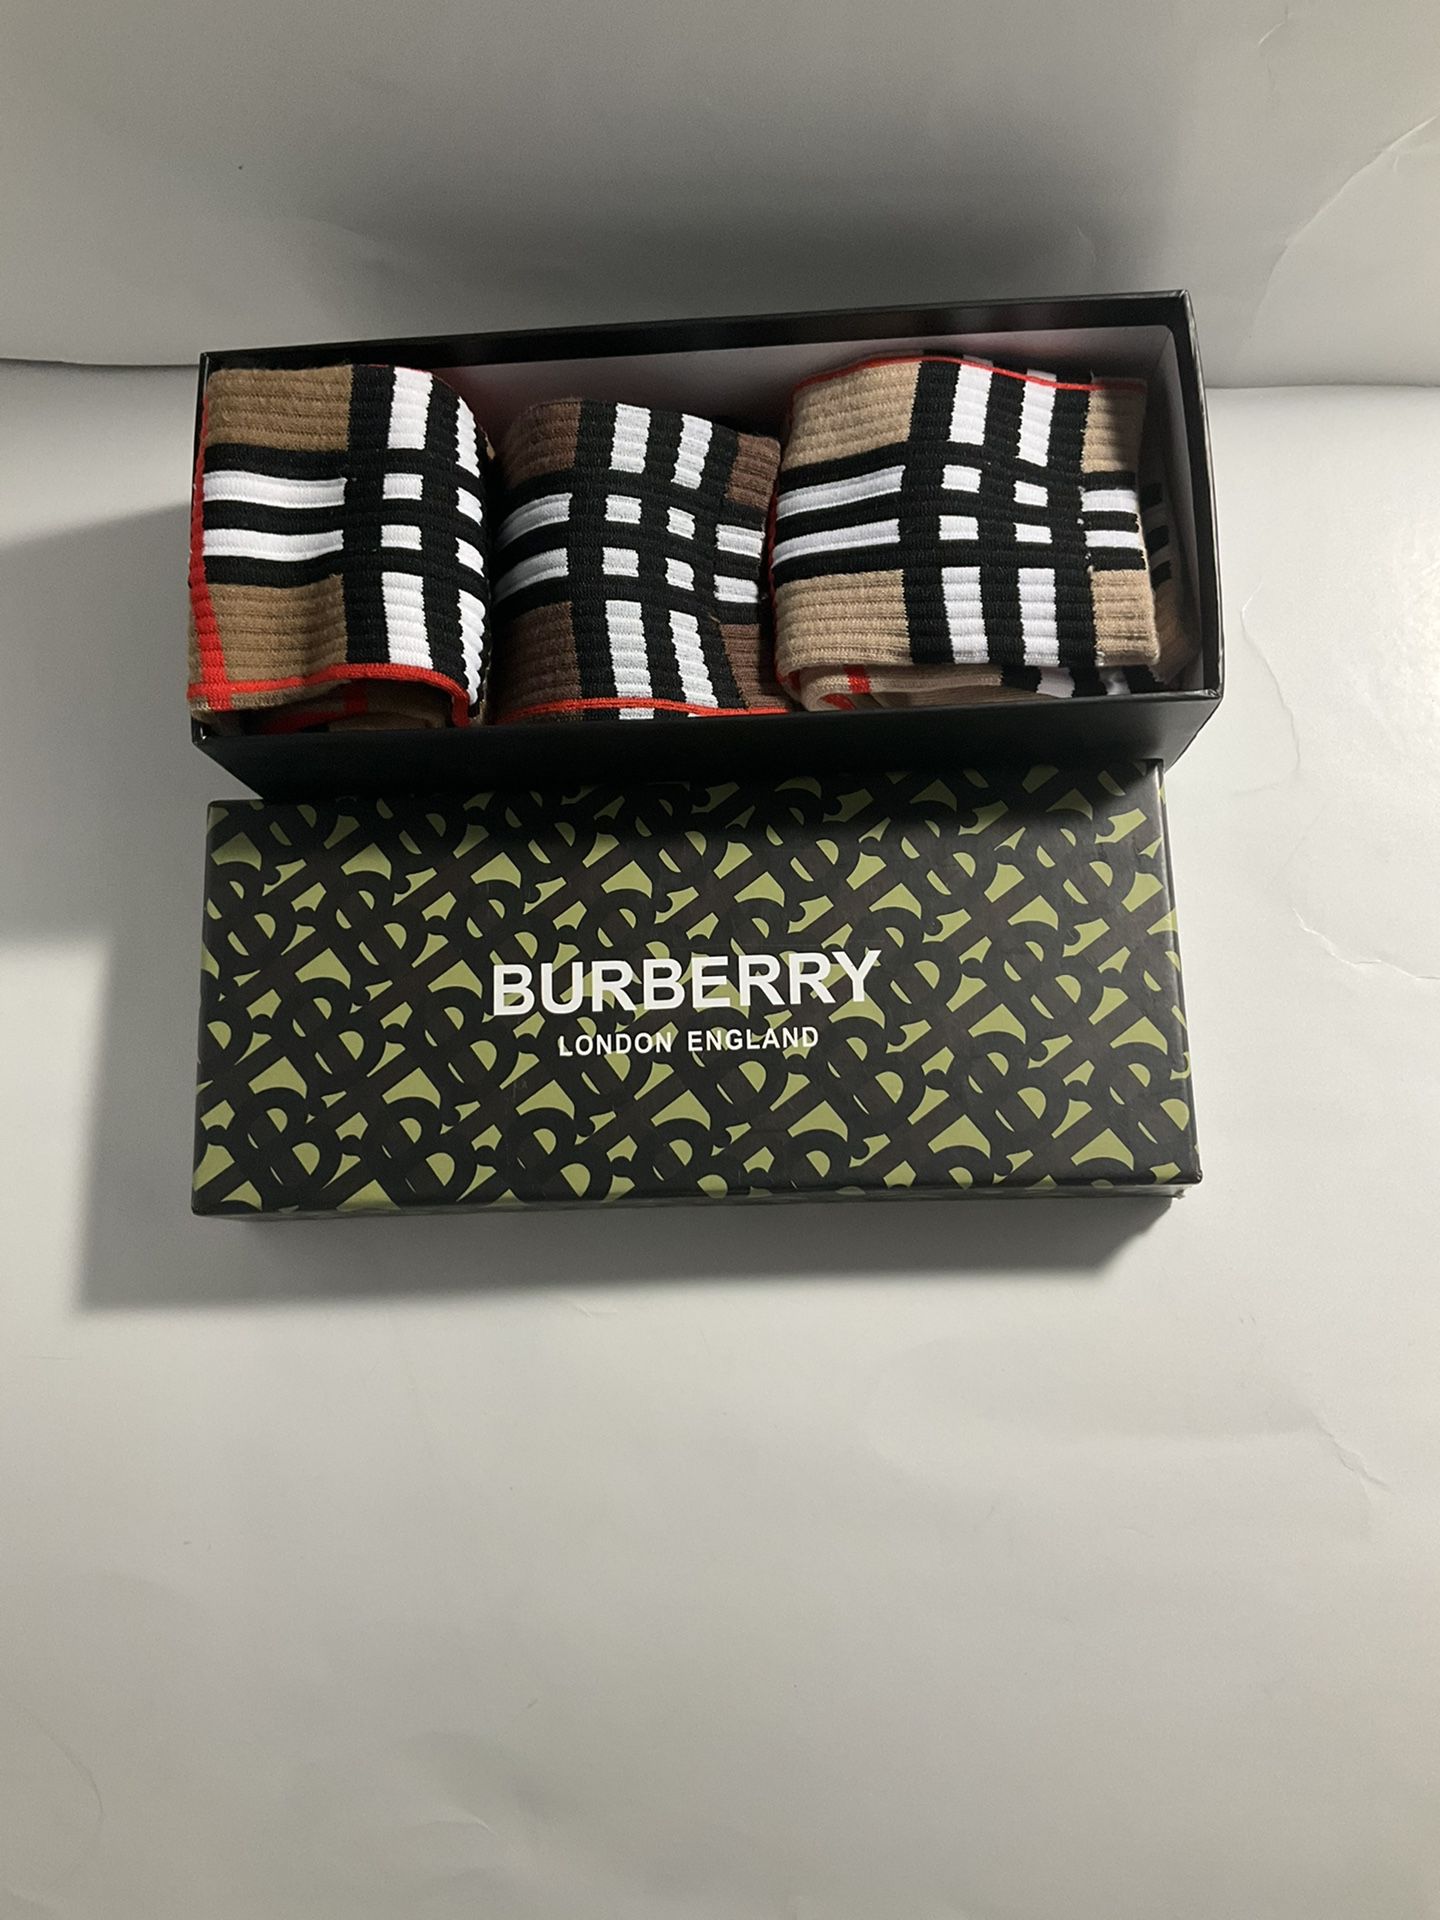 Burberry Socks Price Belgium, SAVE 56% 